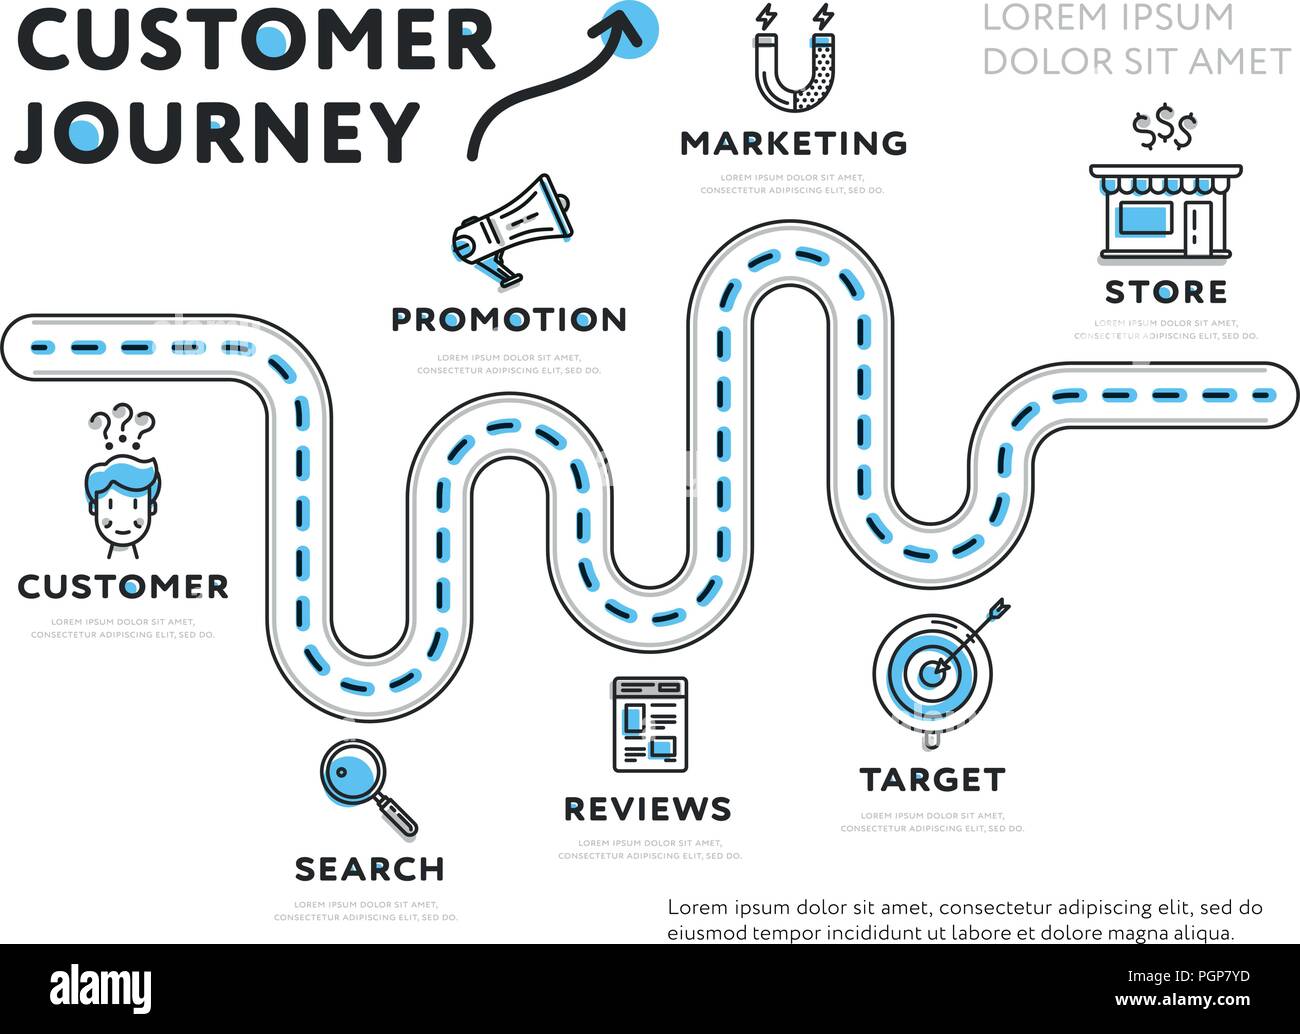 Infographic Template Of Customer Journey Stock Vector Image Art Alamy